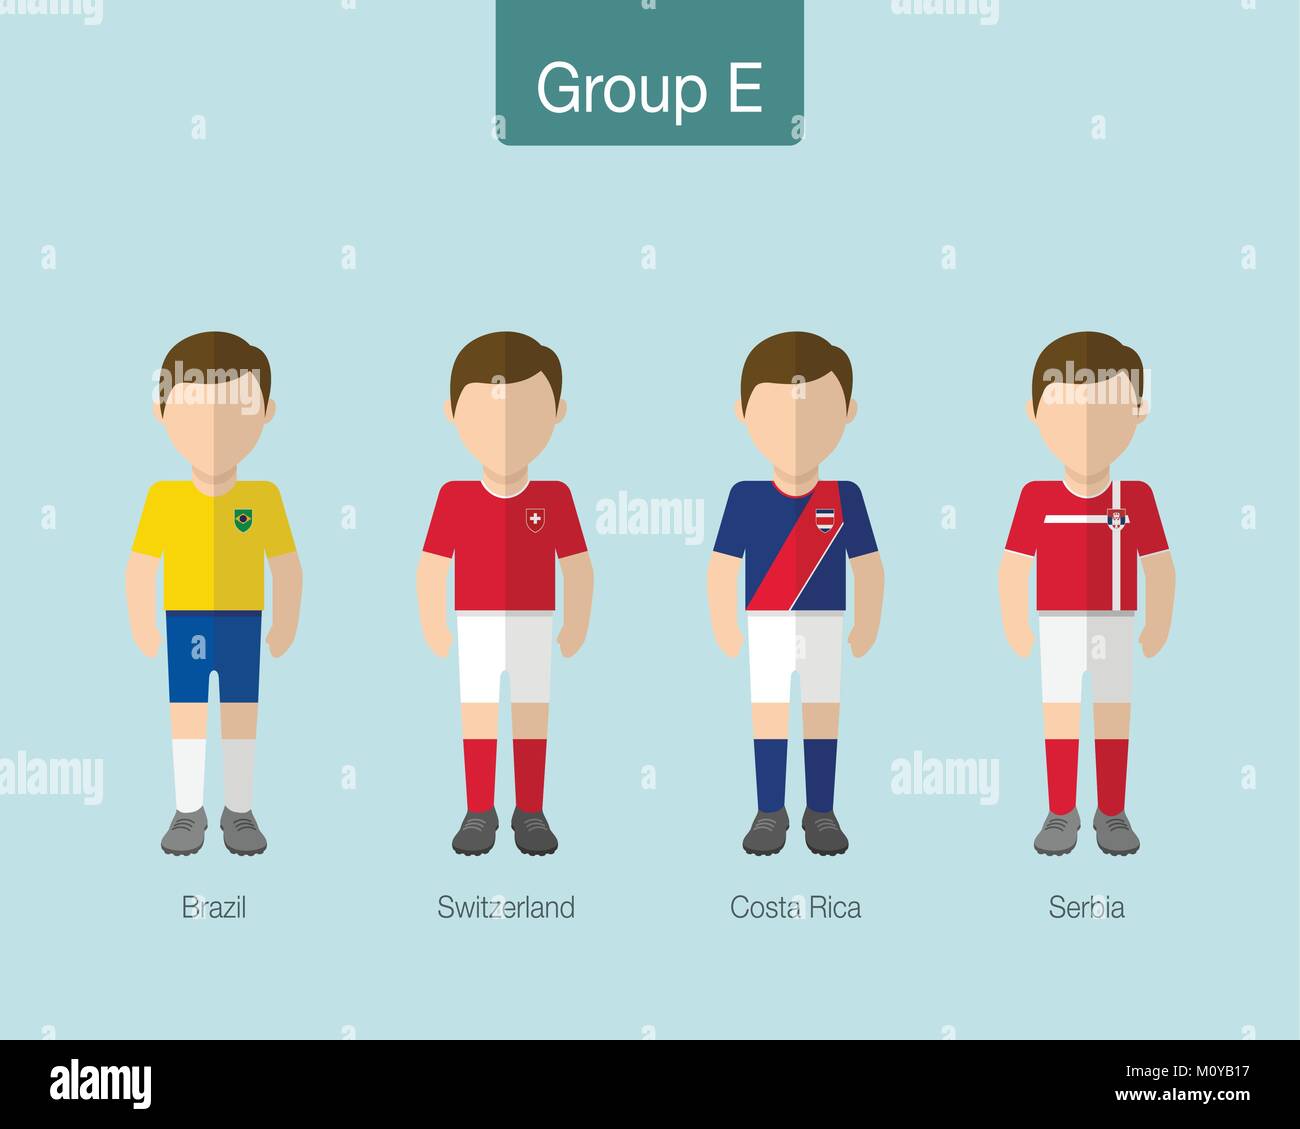 2018 Soccer or football team uniform. Group E with BRAZIL, SWITZERLAND, COSTA RICA, SERBIA. Flat design. Vector illustration. Stock Vector